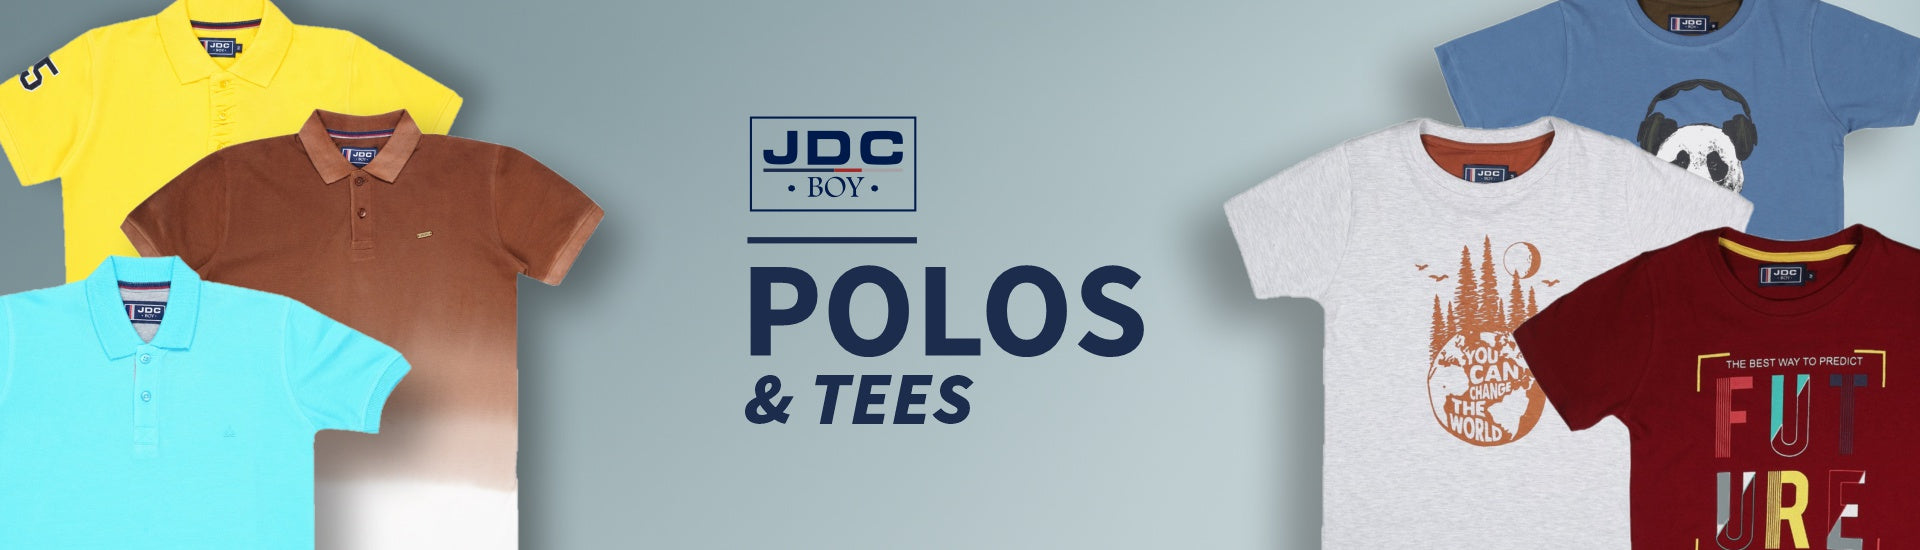 Boy's T-shirt & Polos